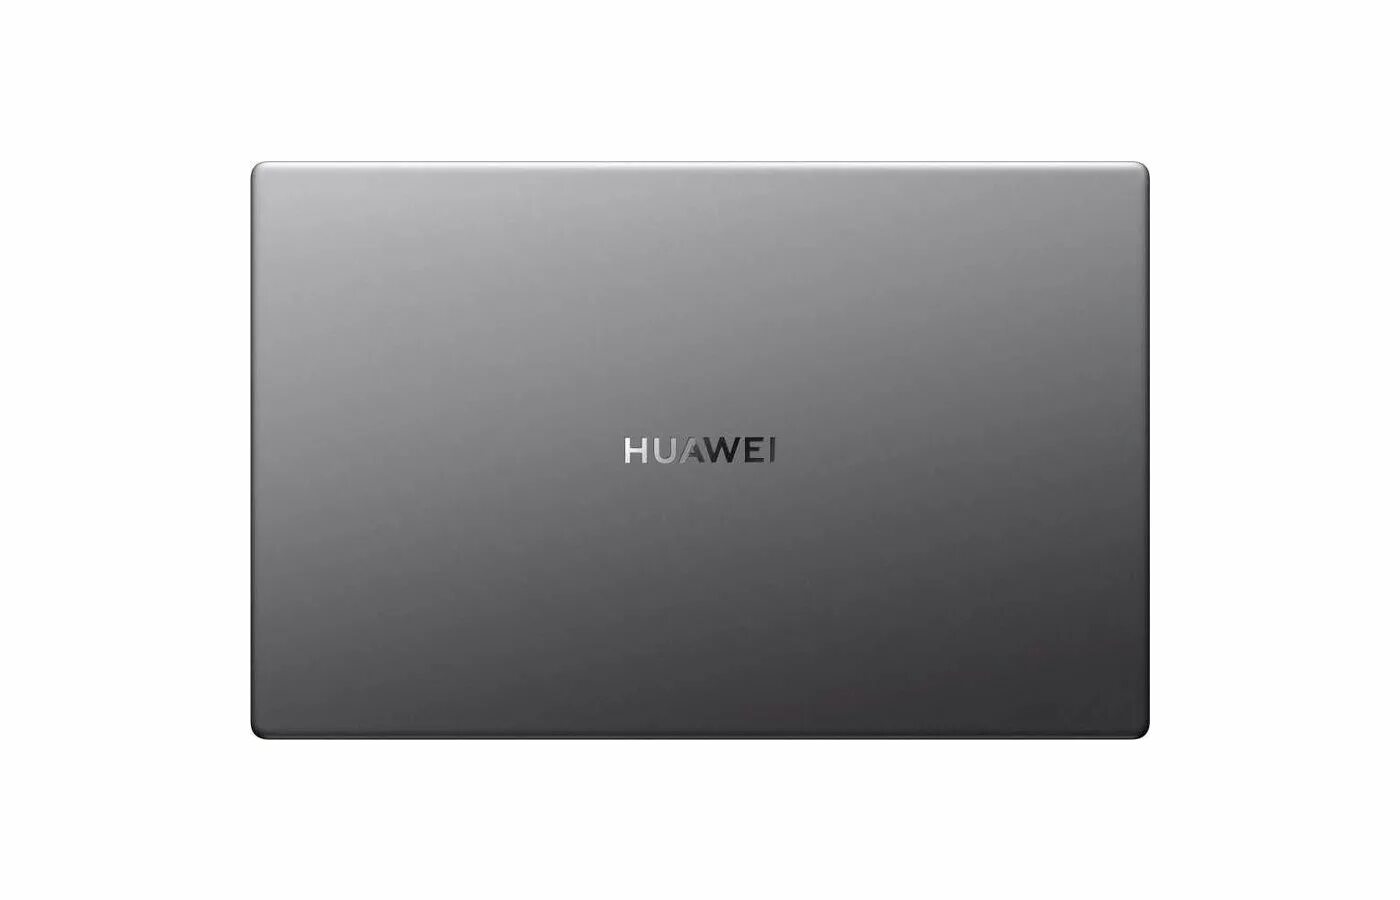 Huawei matebook d 15 ryzen 7 5700u. Ноутбук Huawei MATEBOOK D 15 Bob-wai9 8+256gb Mystic Silver. 14" Ноутбук Huawei MATEBOOK D 14nbb-wai9. 15.6" Ноутбук Huawei MATEBOOK D. Ноутбук Huawei 53013plu NBD-wdi9 MATEBOOK d14.